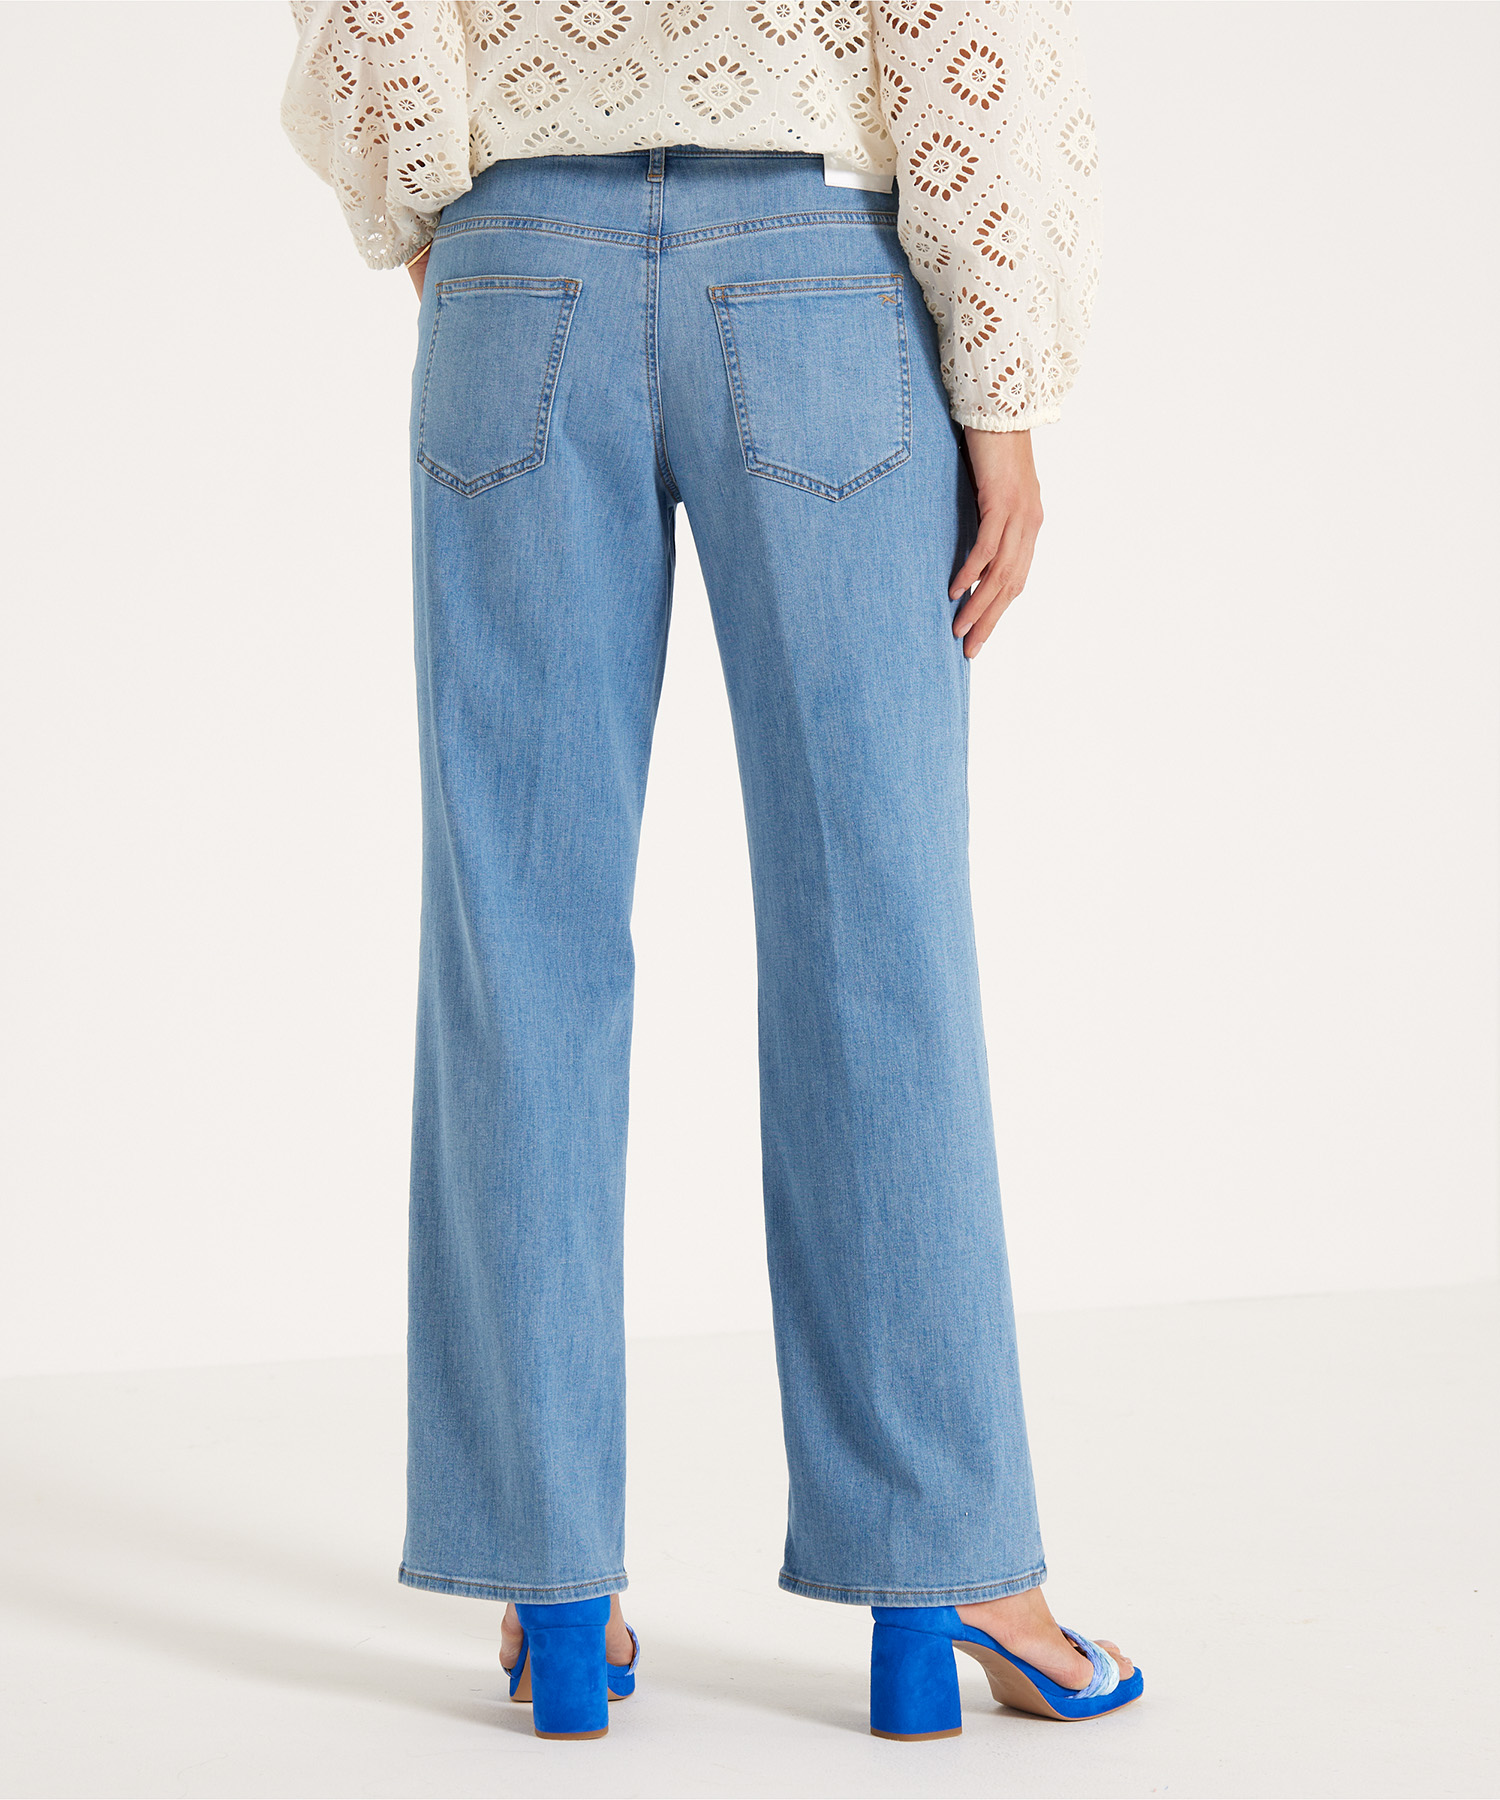 Brax wide leg jeans Maine